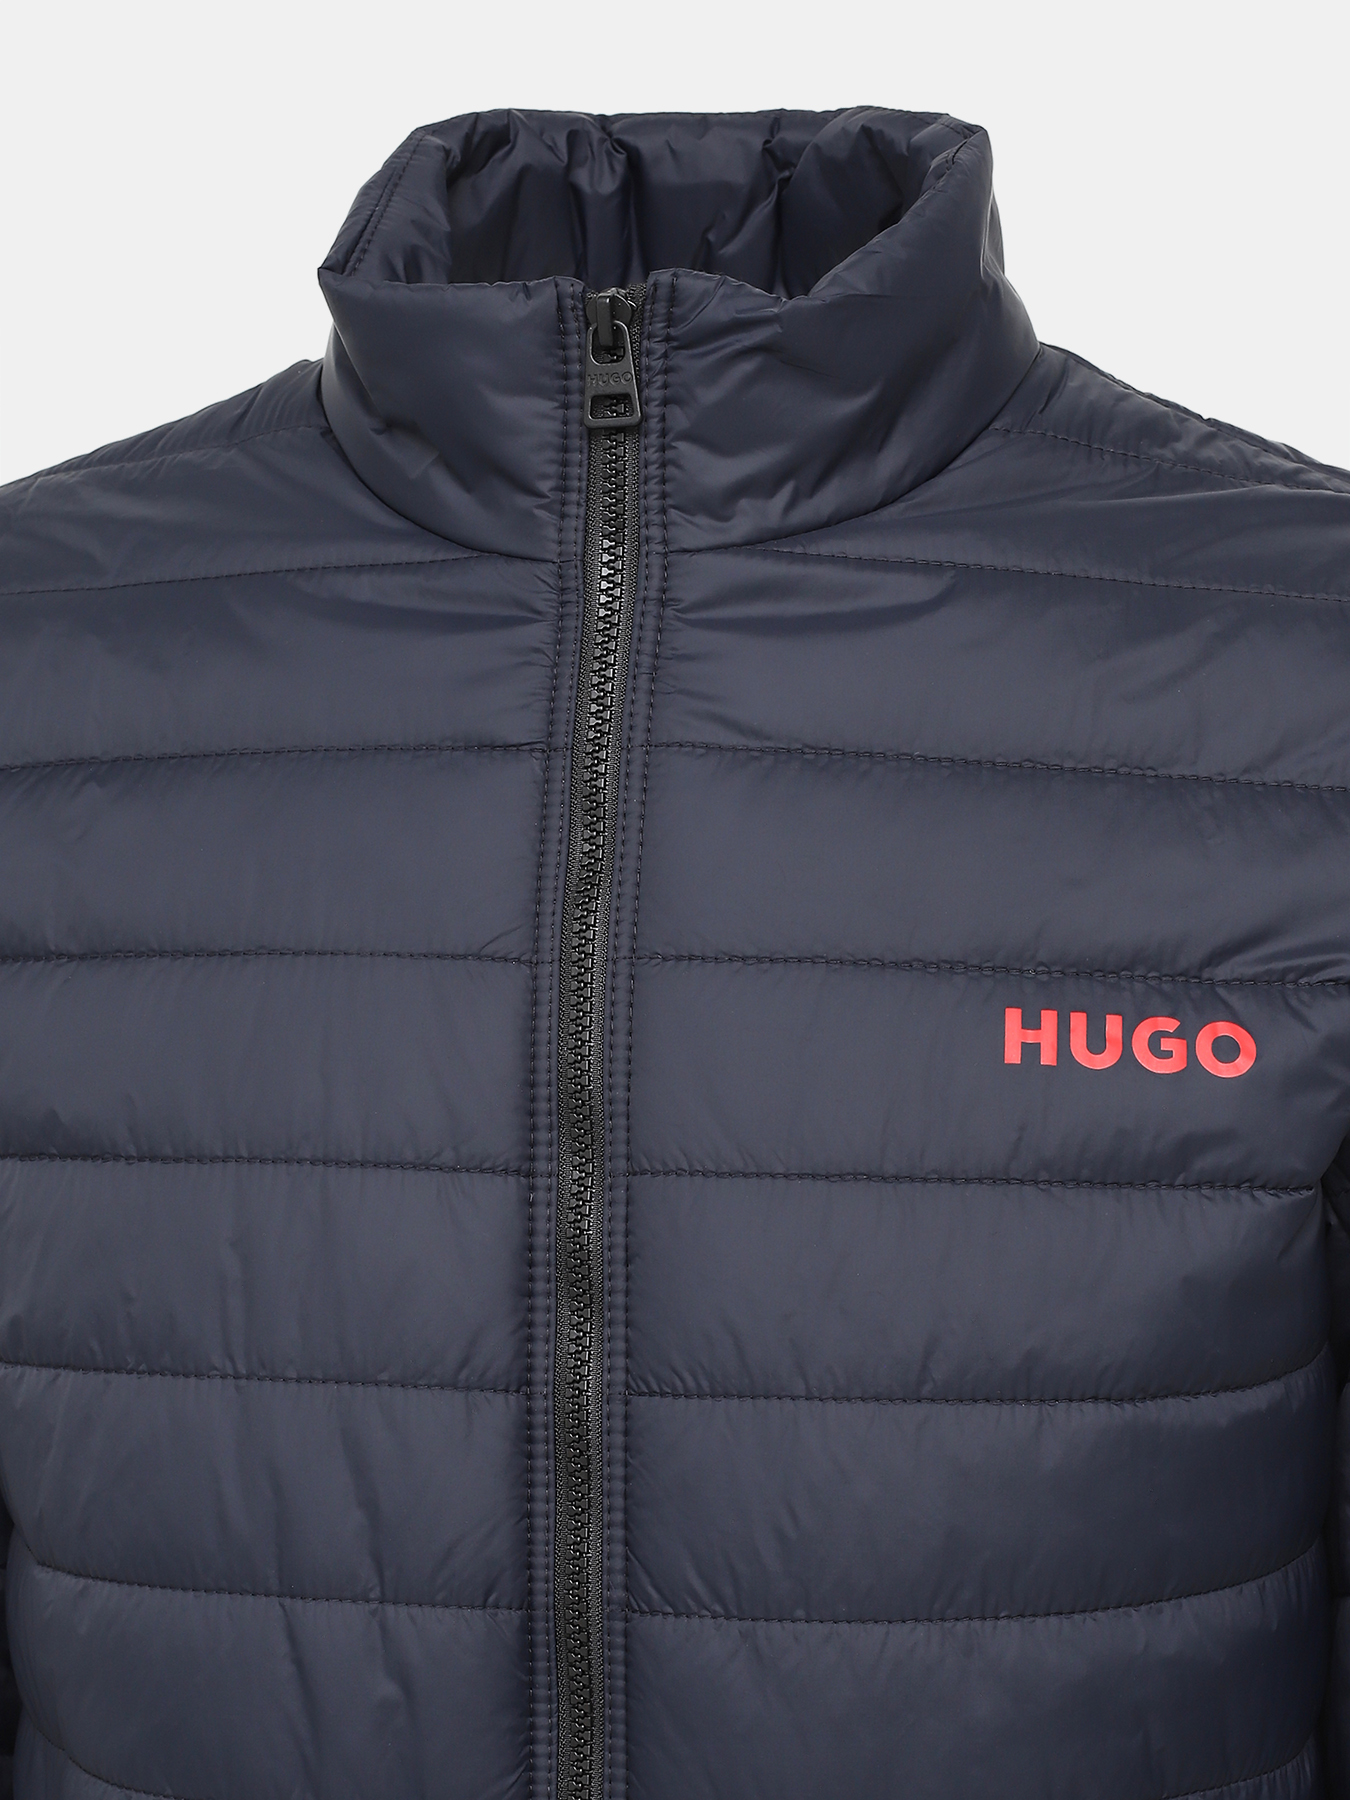 Куртка Benti HUGO 421240-046, цвет темно-синий, размер 54-56 - фото 3